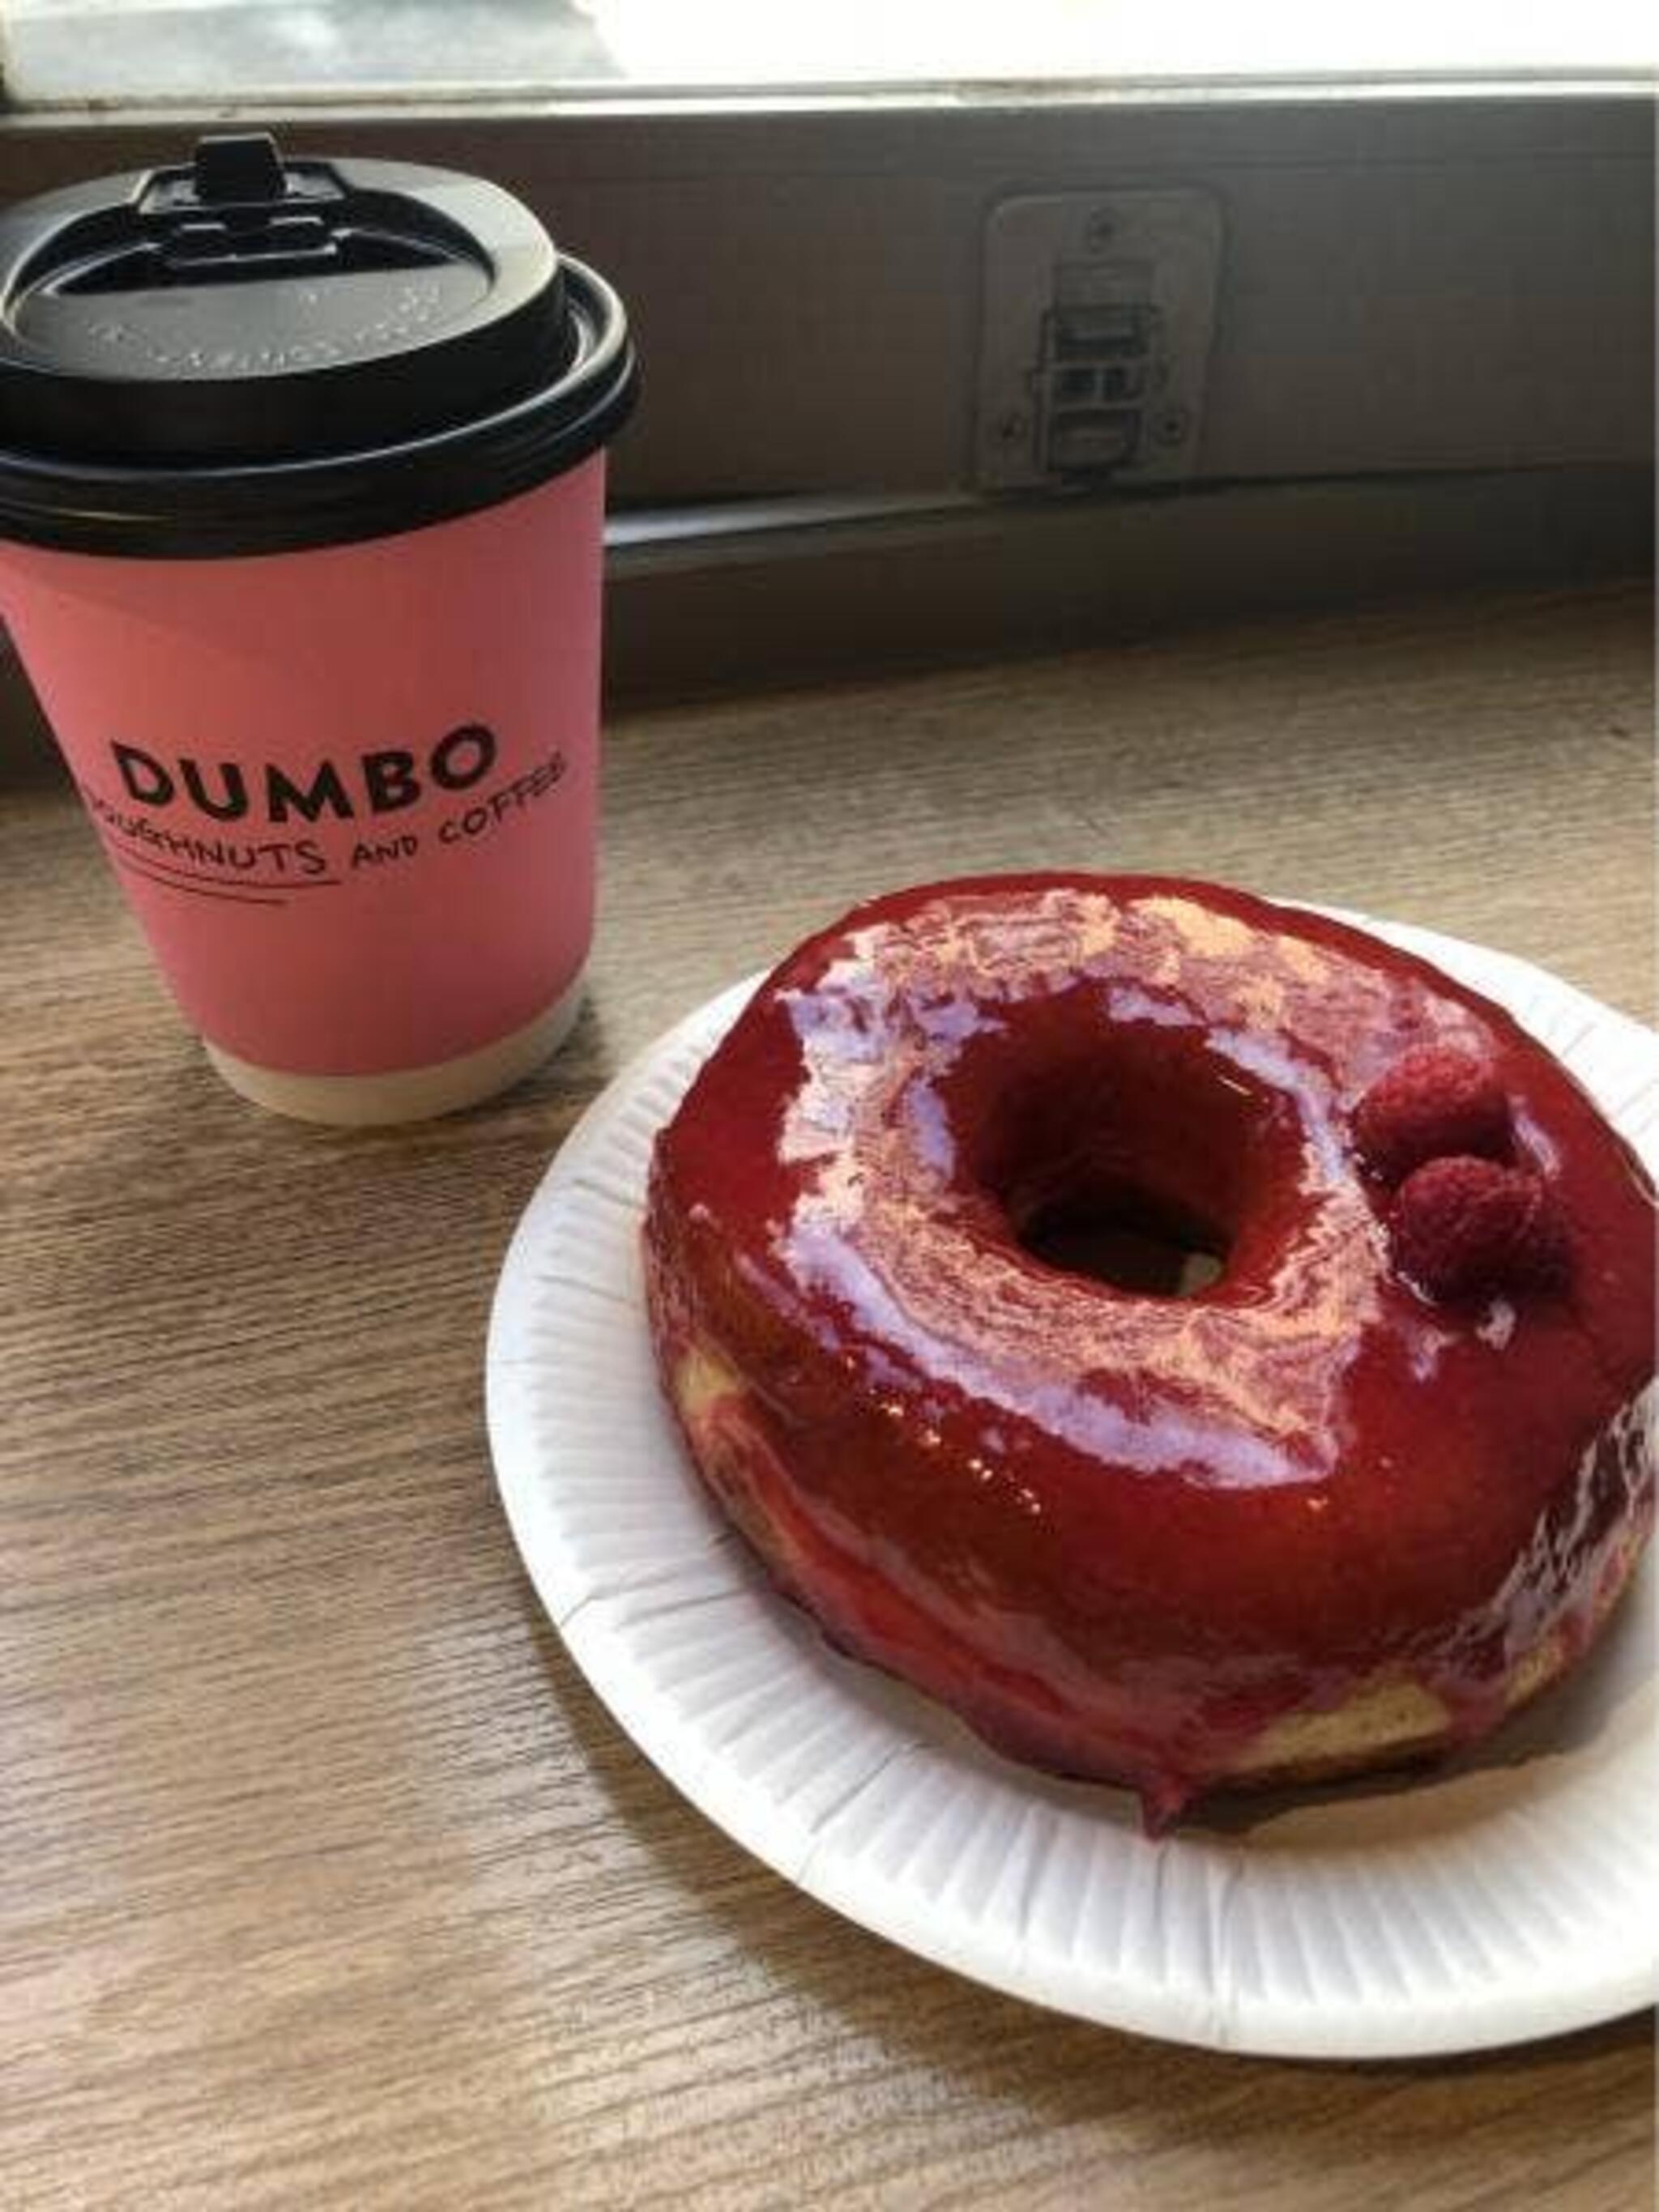 DUMBO Doughnuts and Coffeeの代表写真8